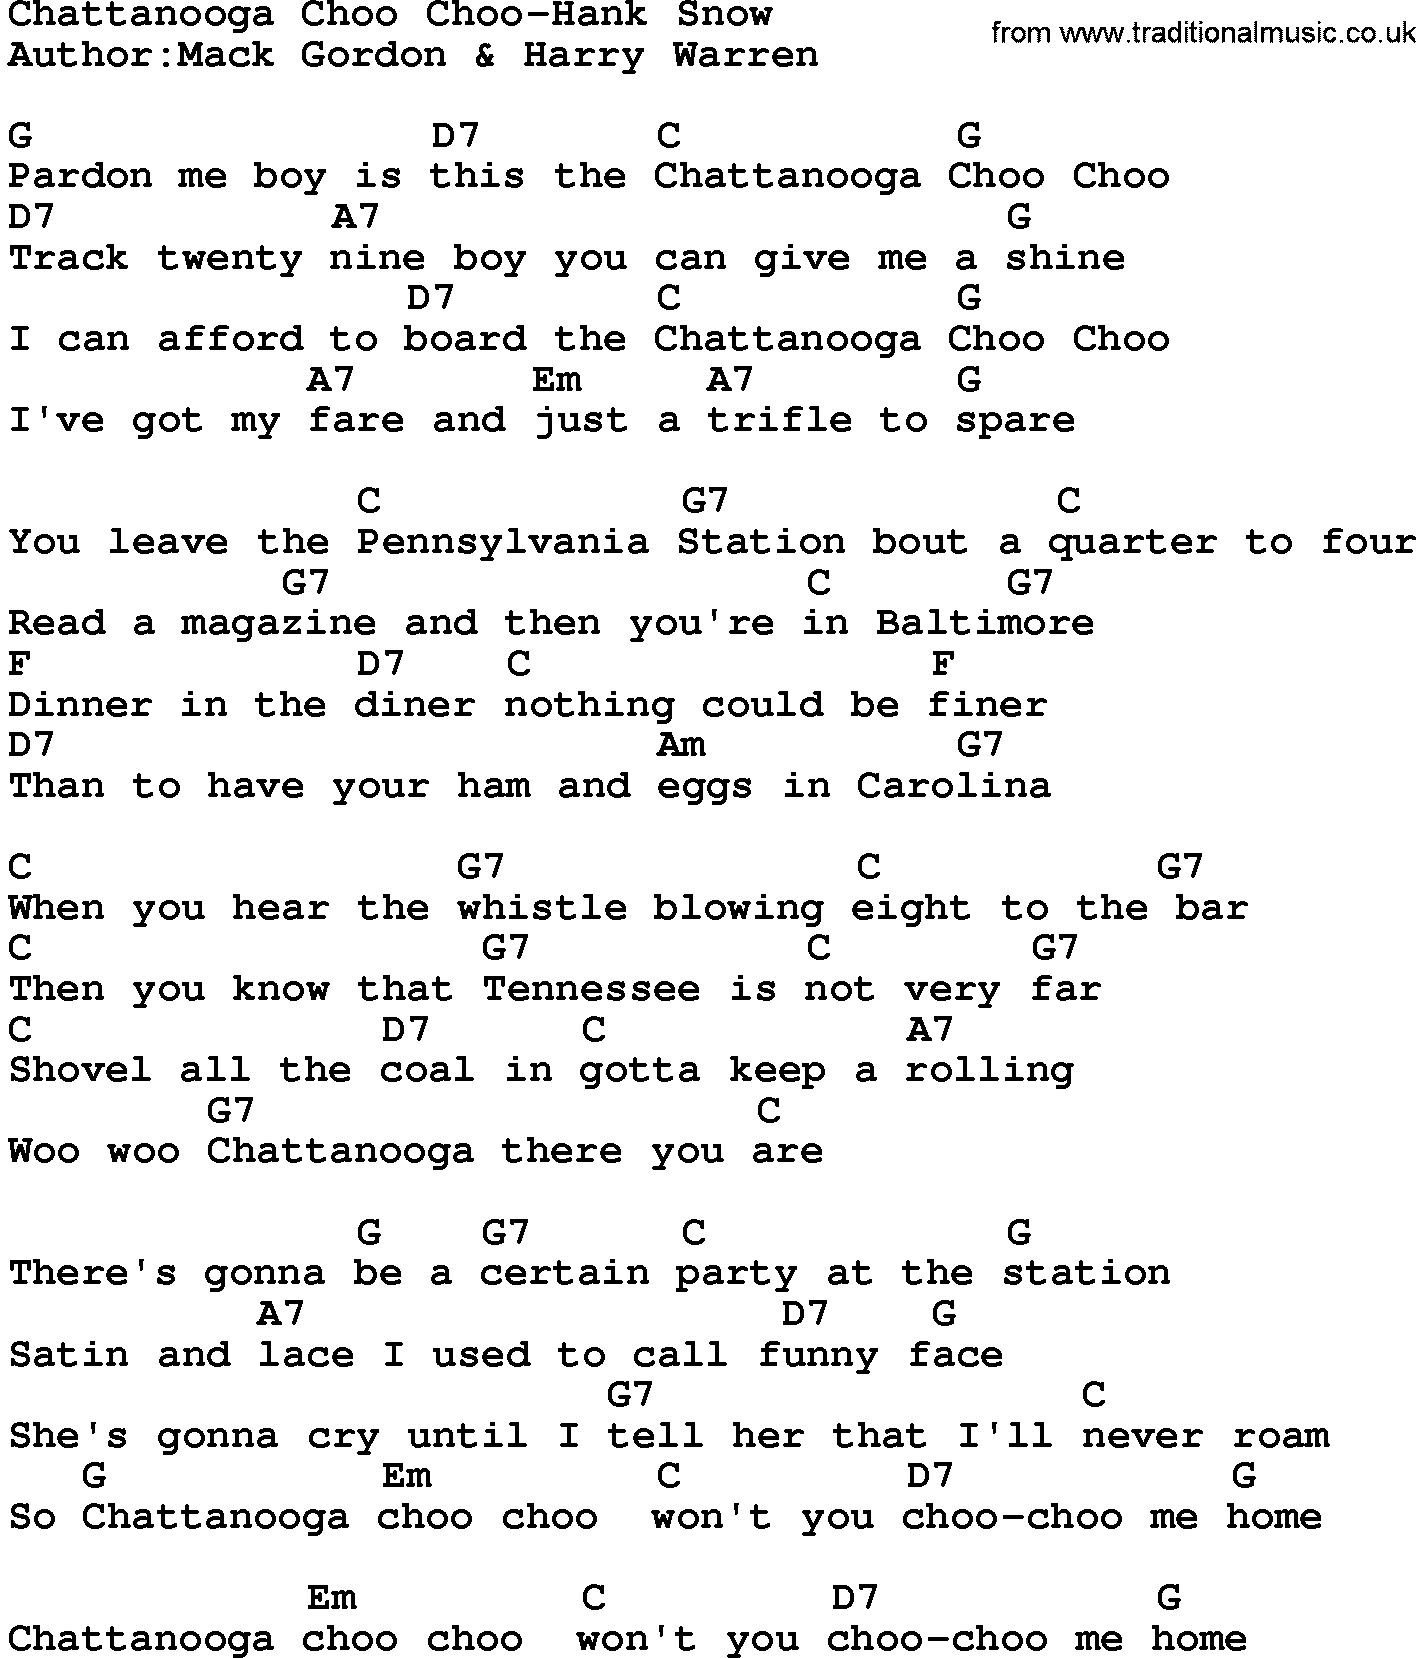 Country music song: Chattanooga Choo Choo-Hank Snow lyrics and chords